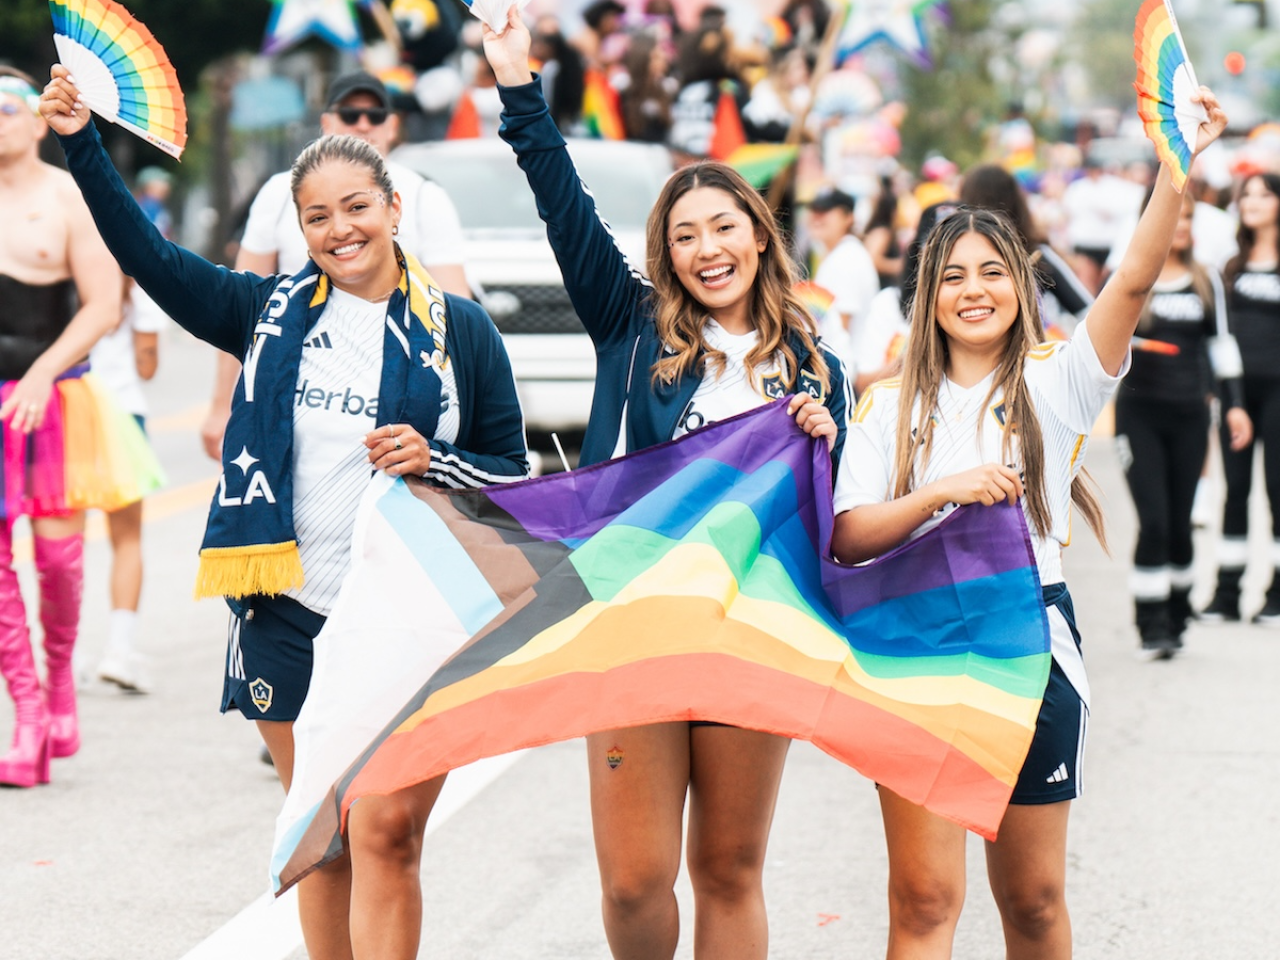 AEG's LA Galaxy employees marched in the LA Pride Parade.